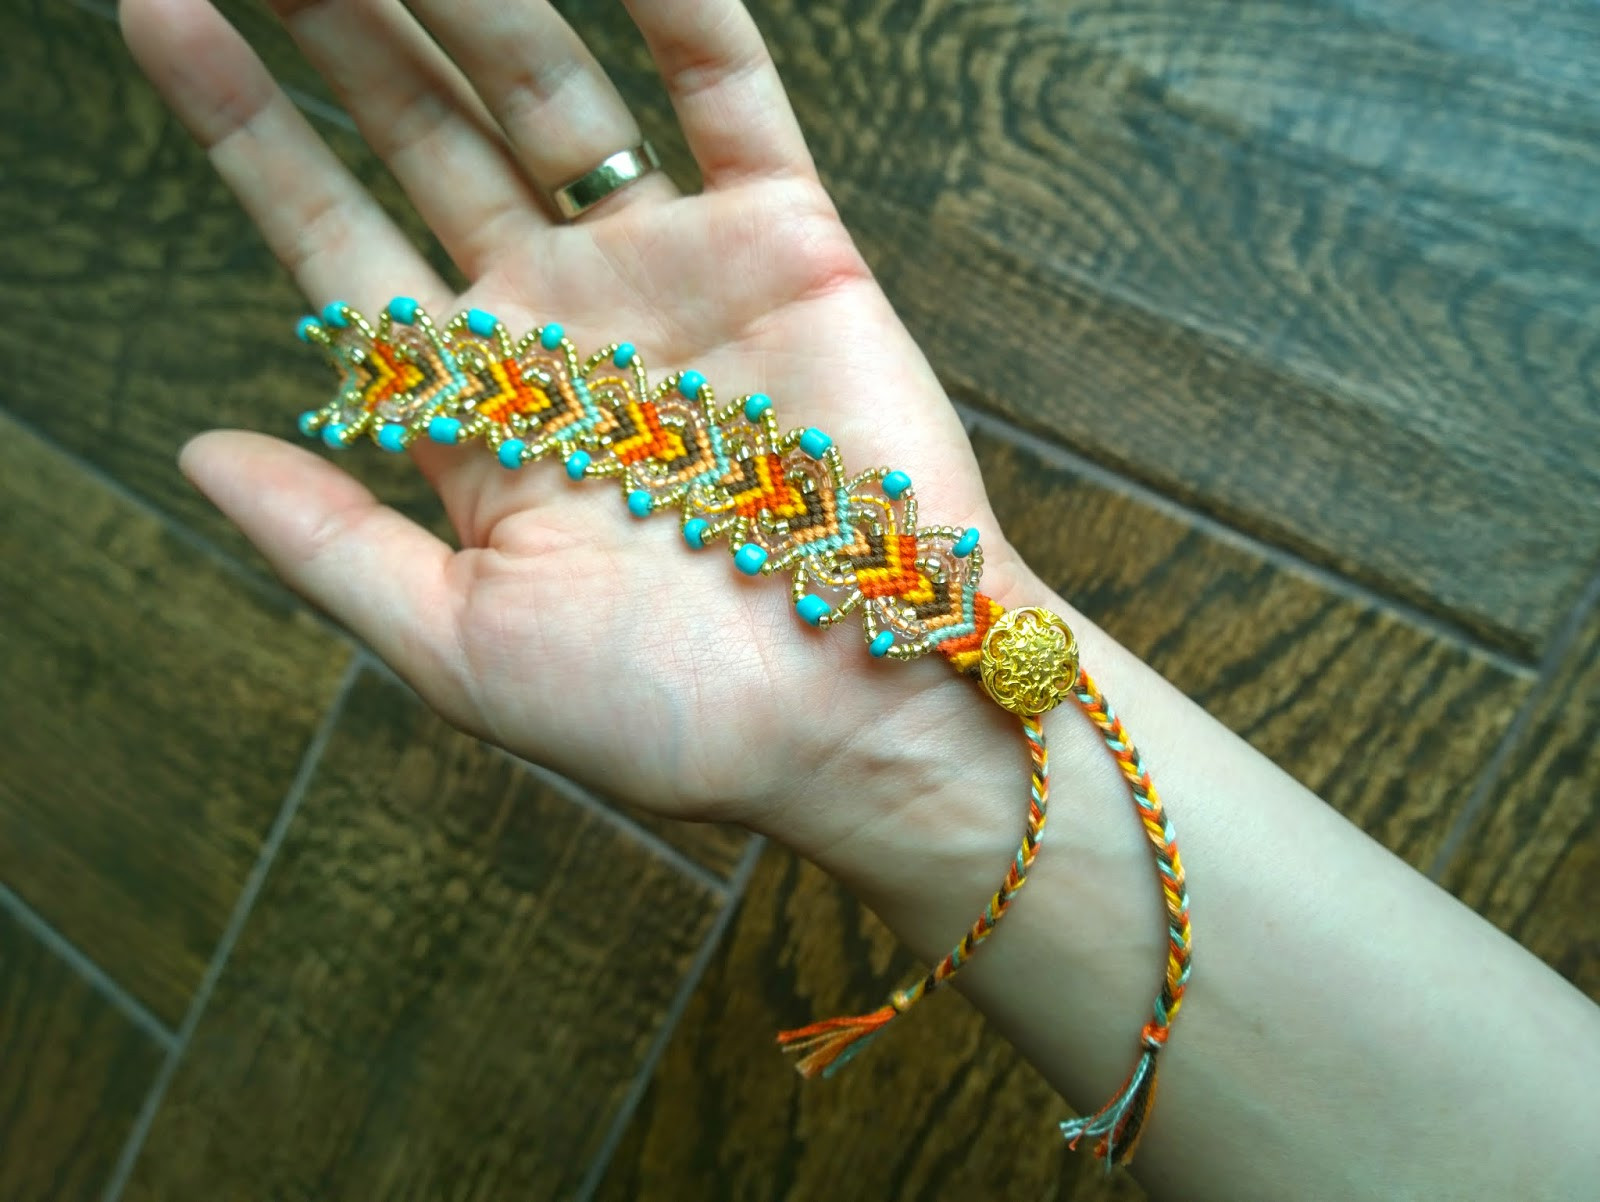 Best ideas about DIY Friendship Bracelets Patterns
. Save or Pin Wonderful DIY Pretty Leaf Friendship Bracelets Now.